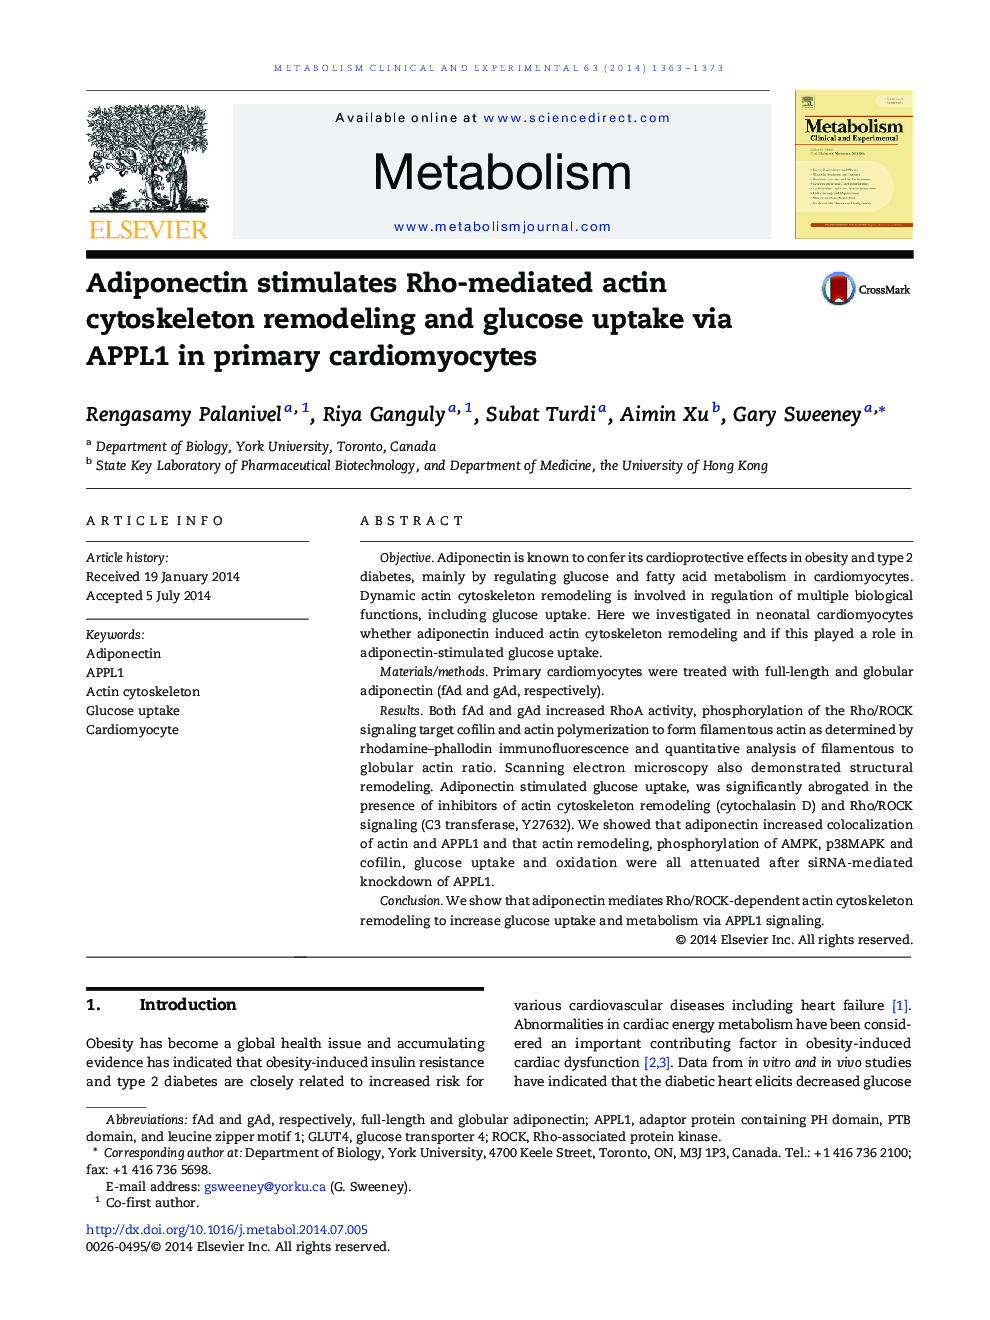 Adiponectin stimulates Rho-mediated actin cytoskeleton remodeling and glucose uptake via APPL1 in primary cardiomyocytes